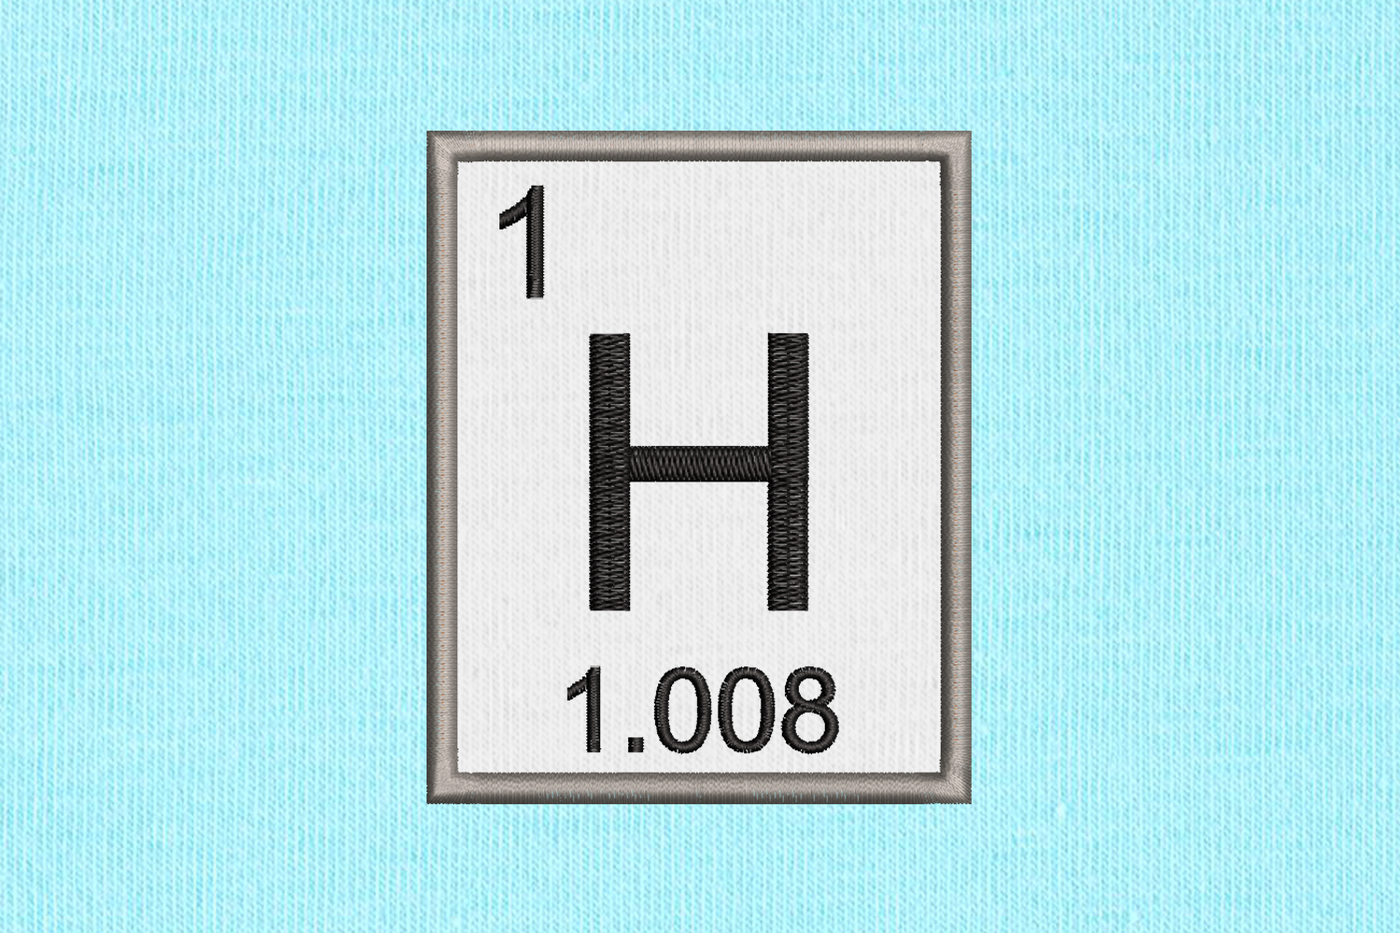 Applique design for the chemical element information for hydrogen